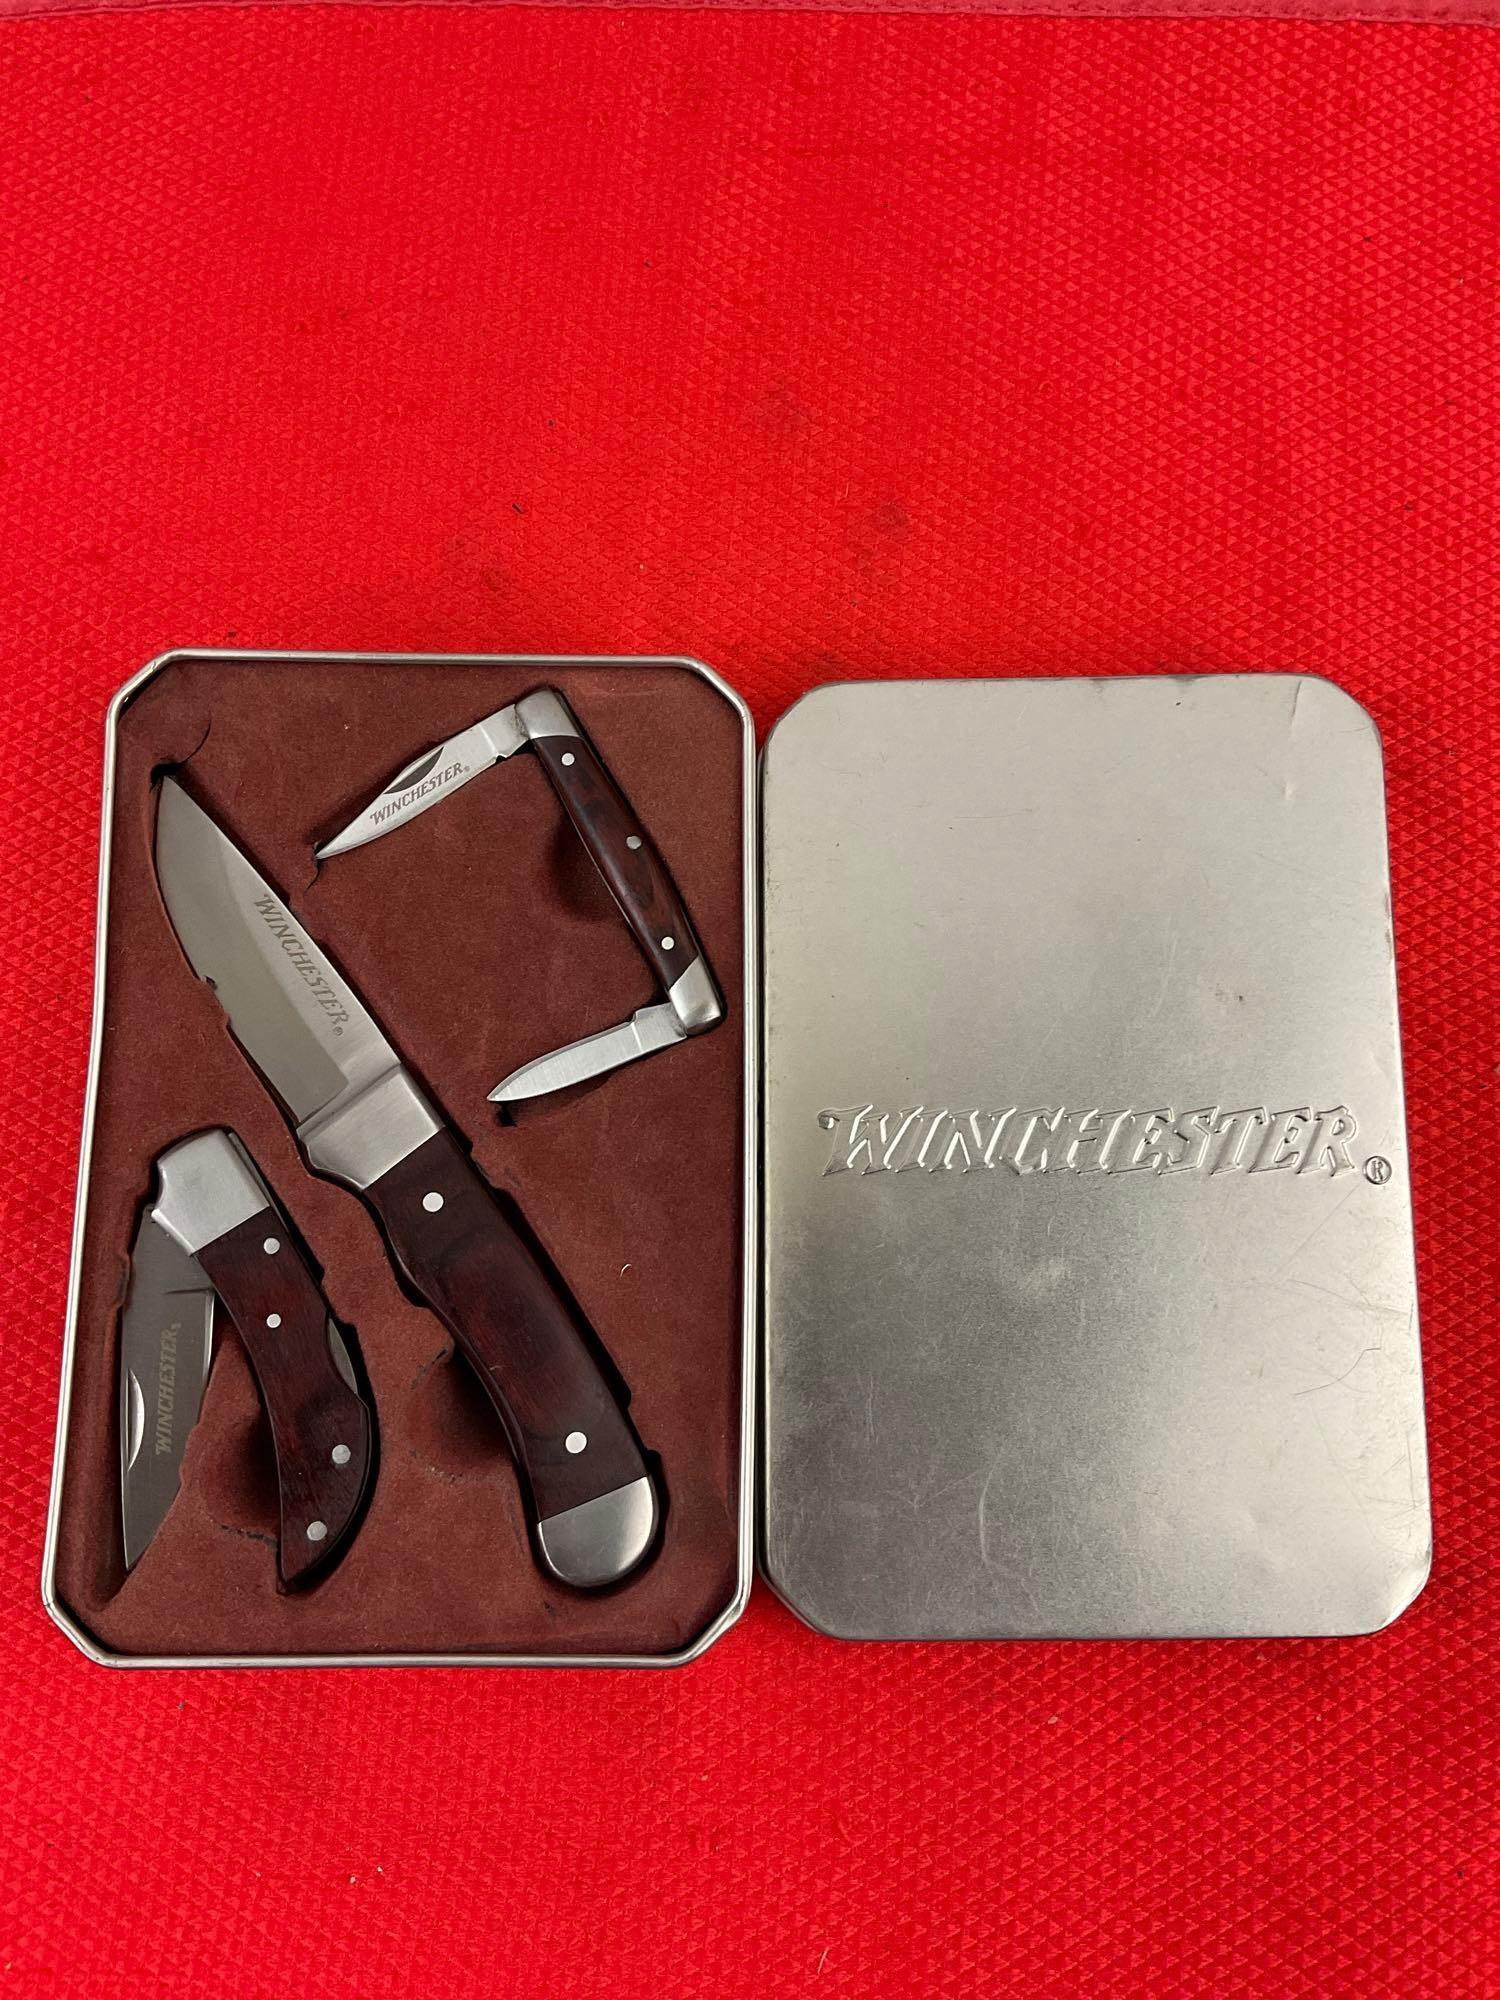 5 pcs Modern Winchester Knife Assortment. 3 Blade Gift Set in Tin. 2x Folding Stockman Knives NIB.